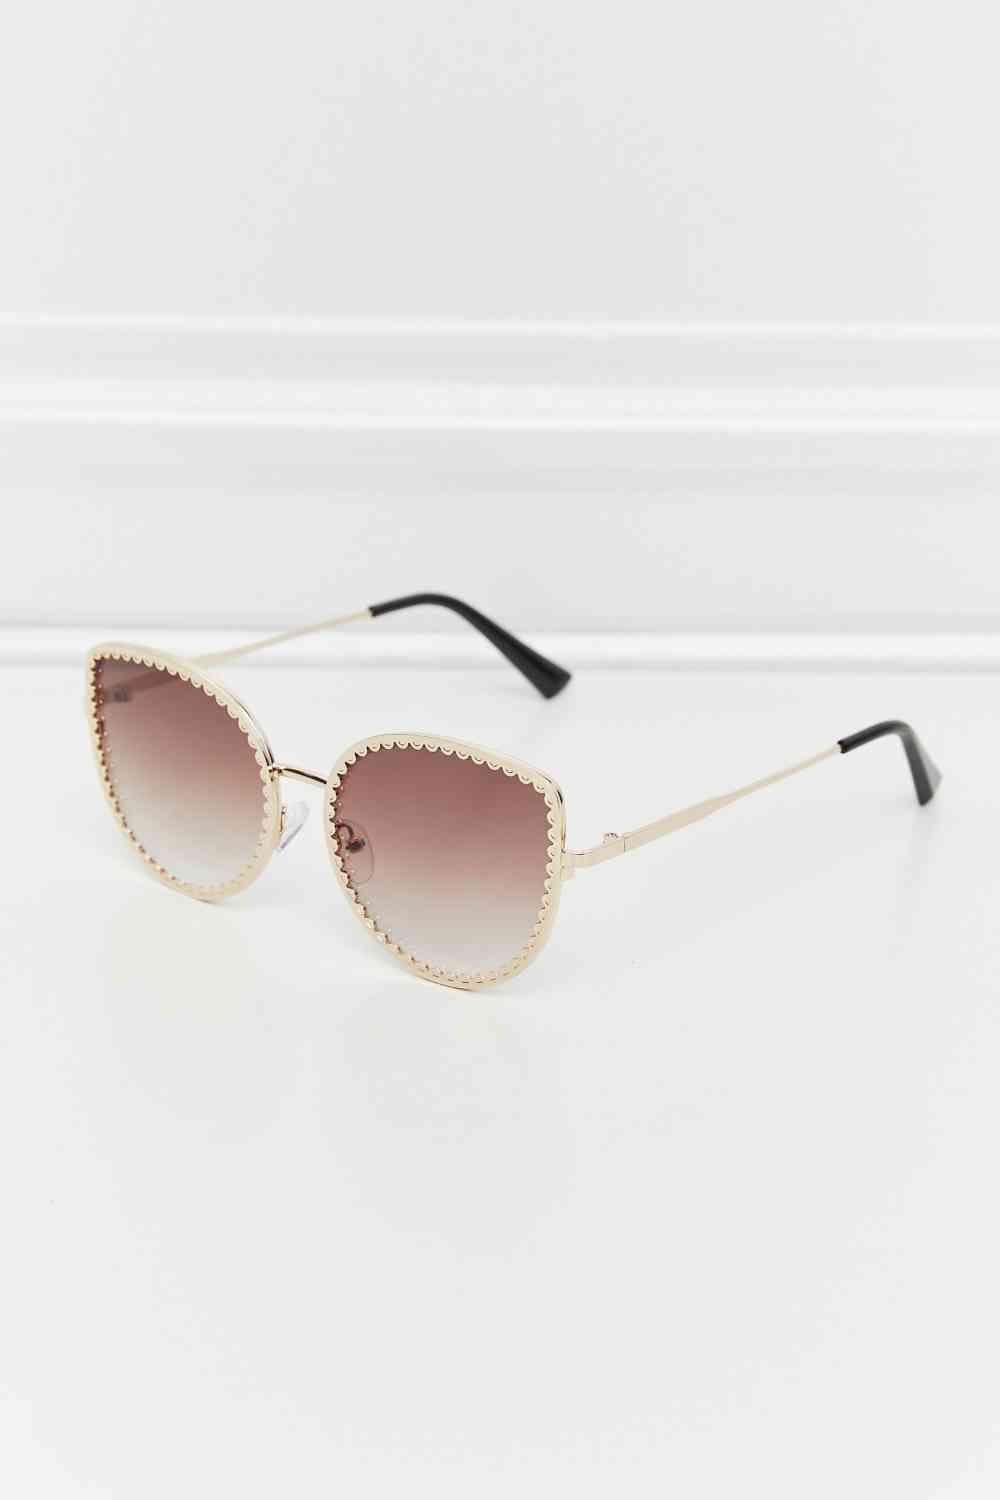 TEEK - Felicia Full Rim Sunglasses EYEGLASSES TEEK Trend Black  